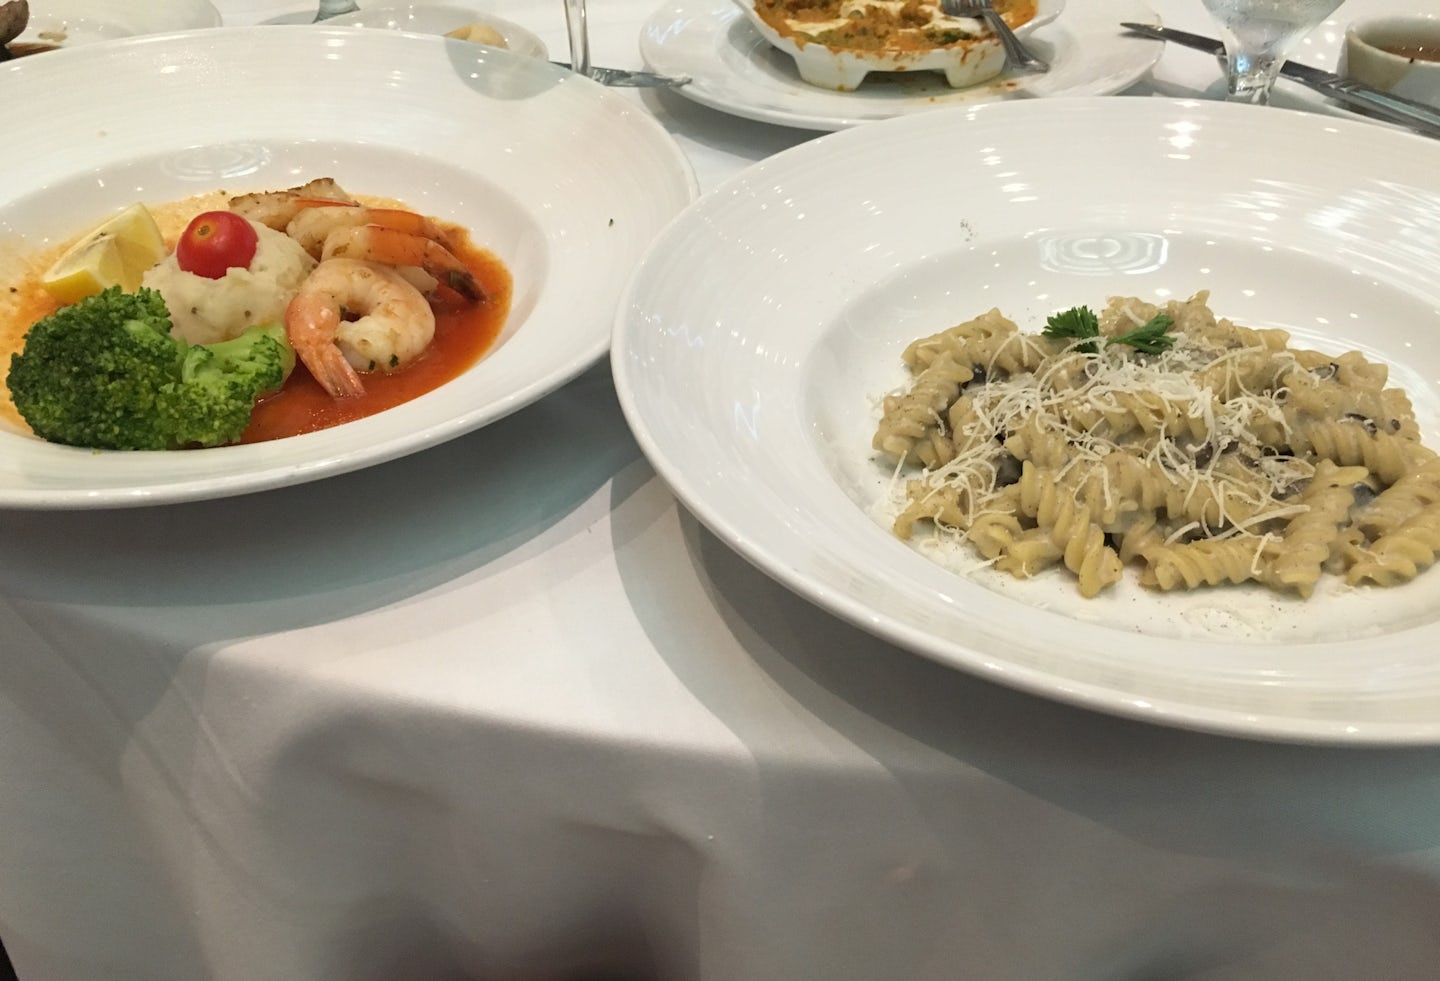 Tiger shrimp and mushroom fusilli pasta. Both delicious.